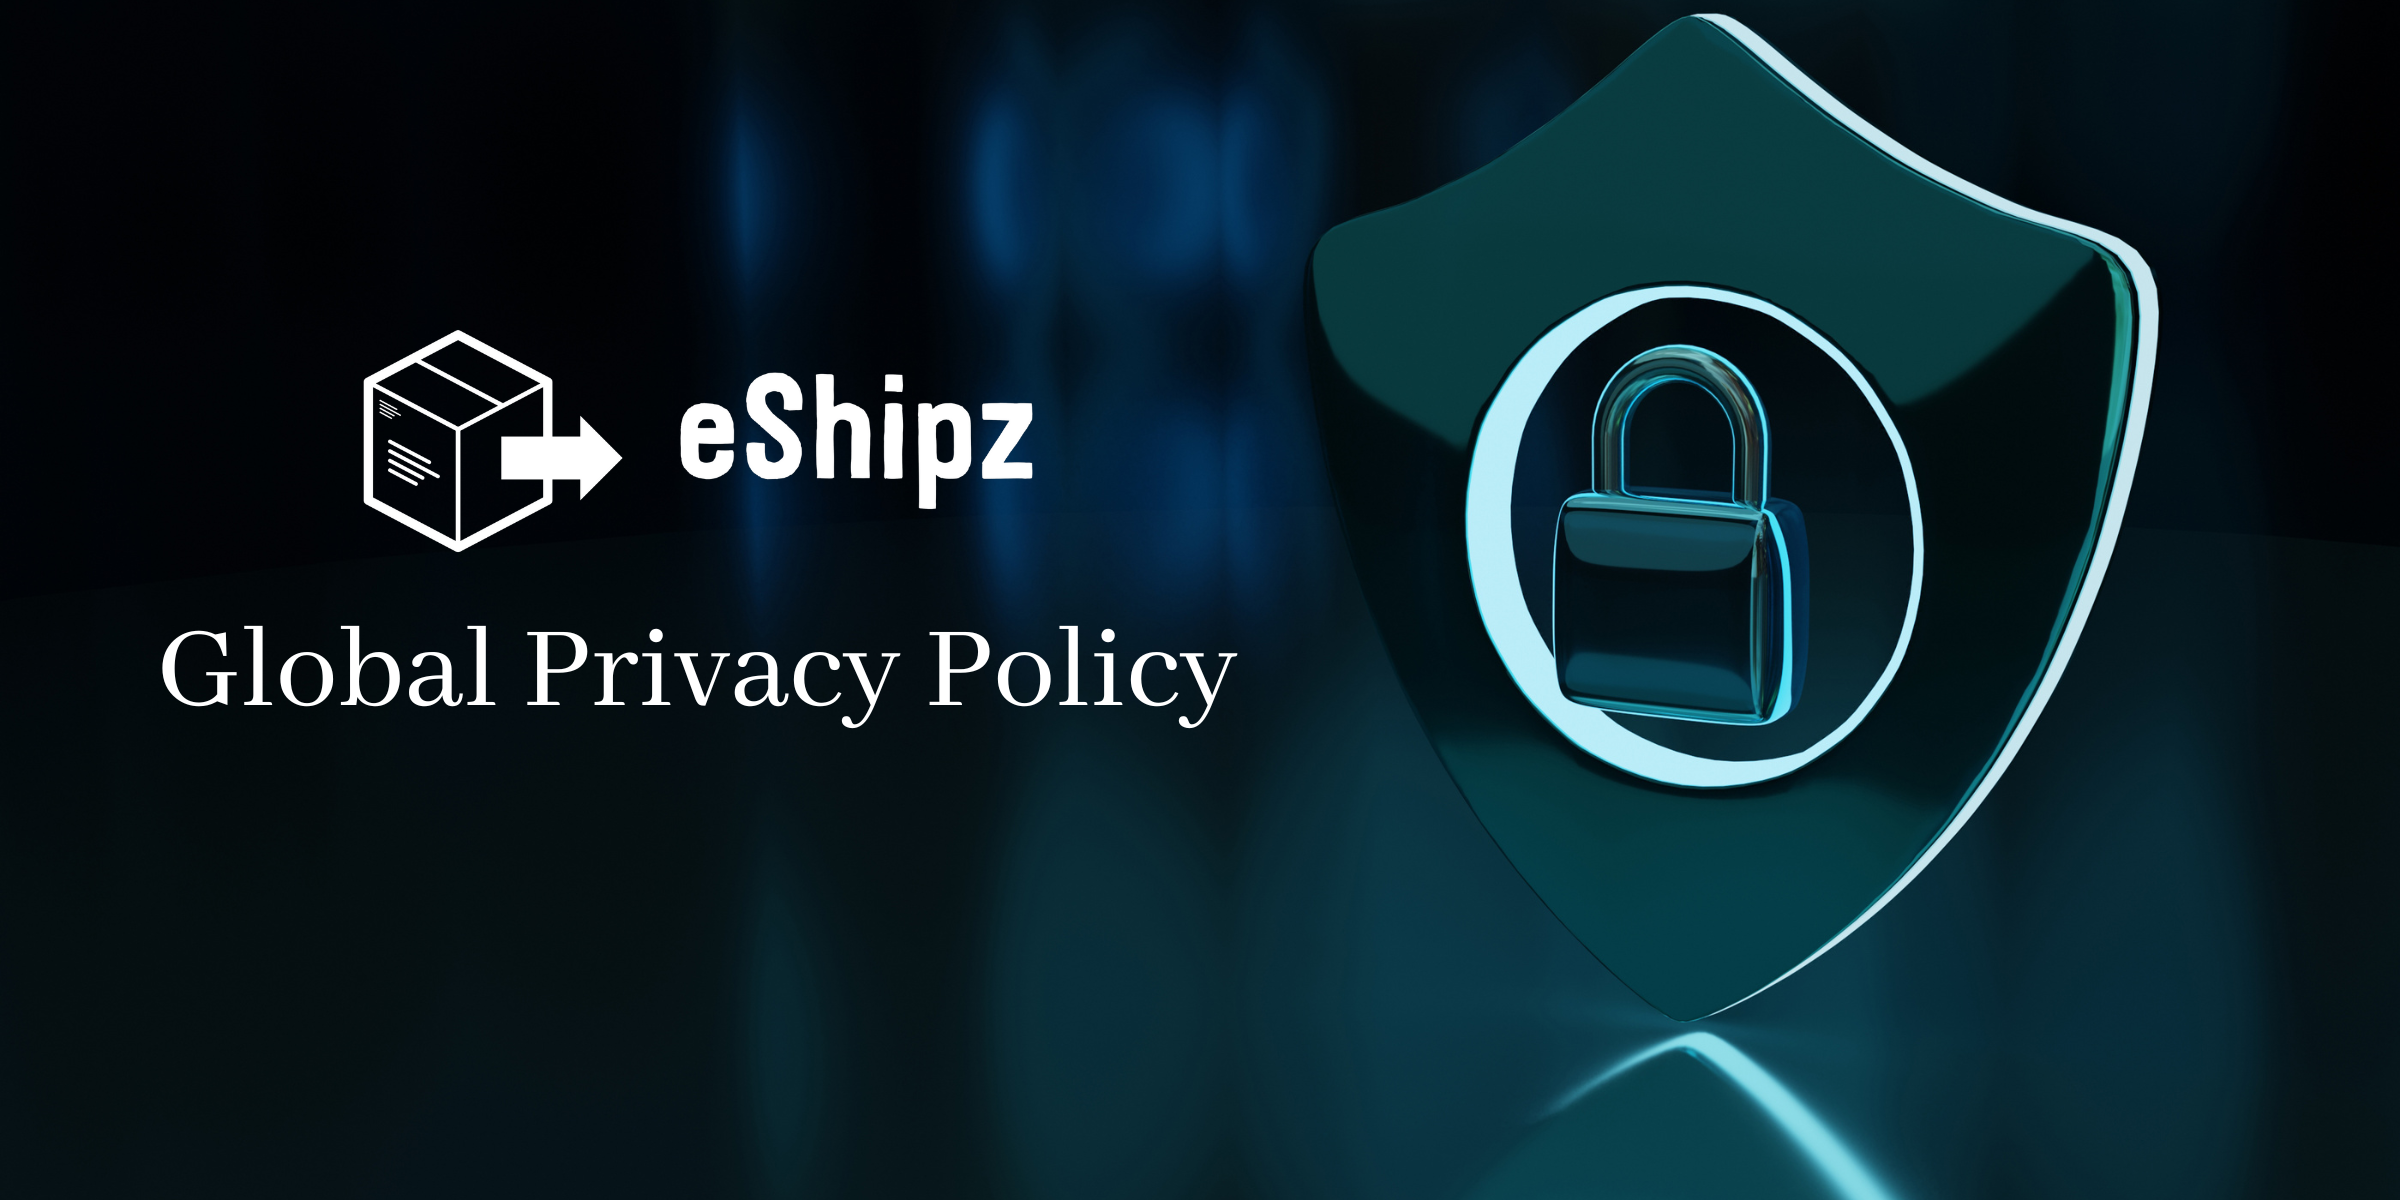 Global Privacy Policy - eShipz